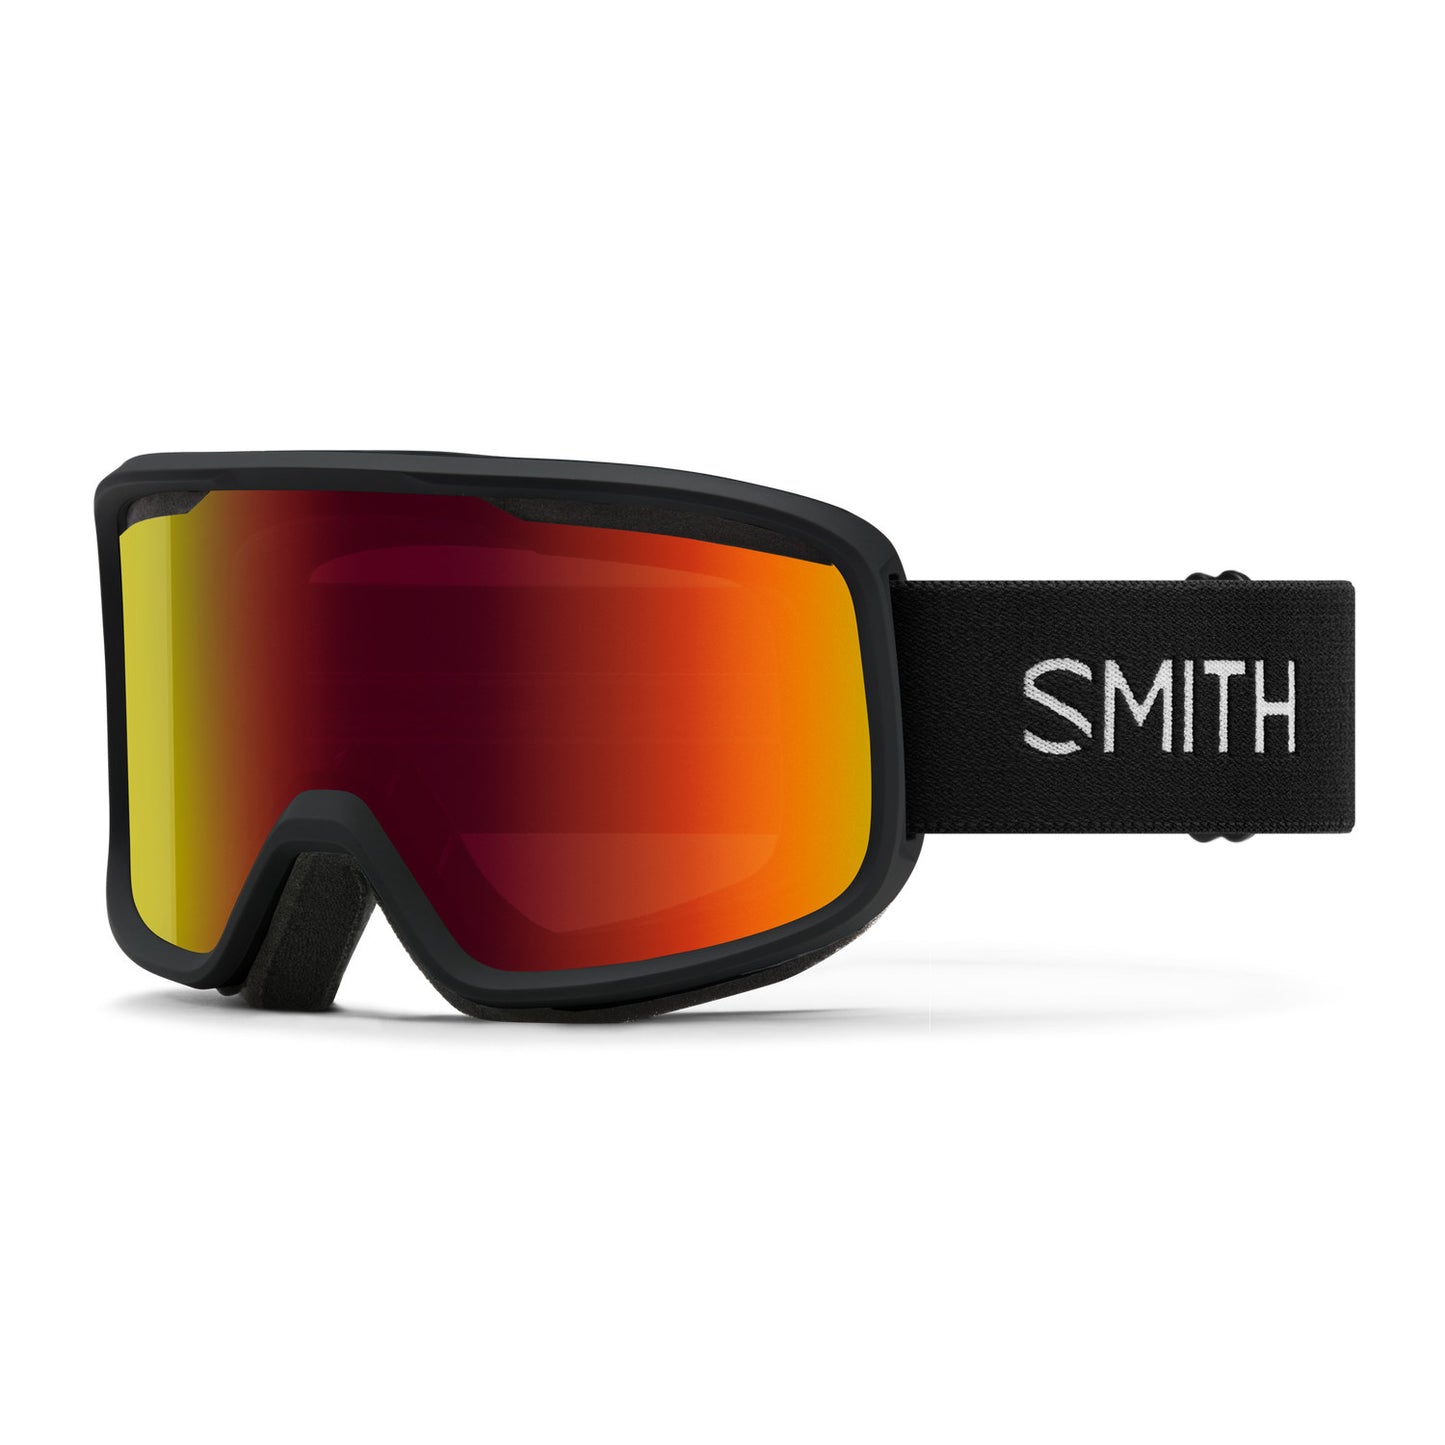 Smith Frontier Snow Goggle Black / Red Sol-X Mirror Snow Goggles